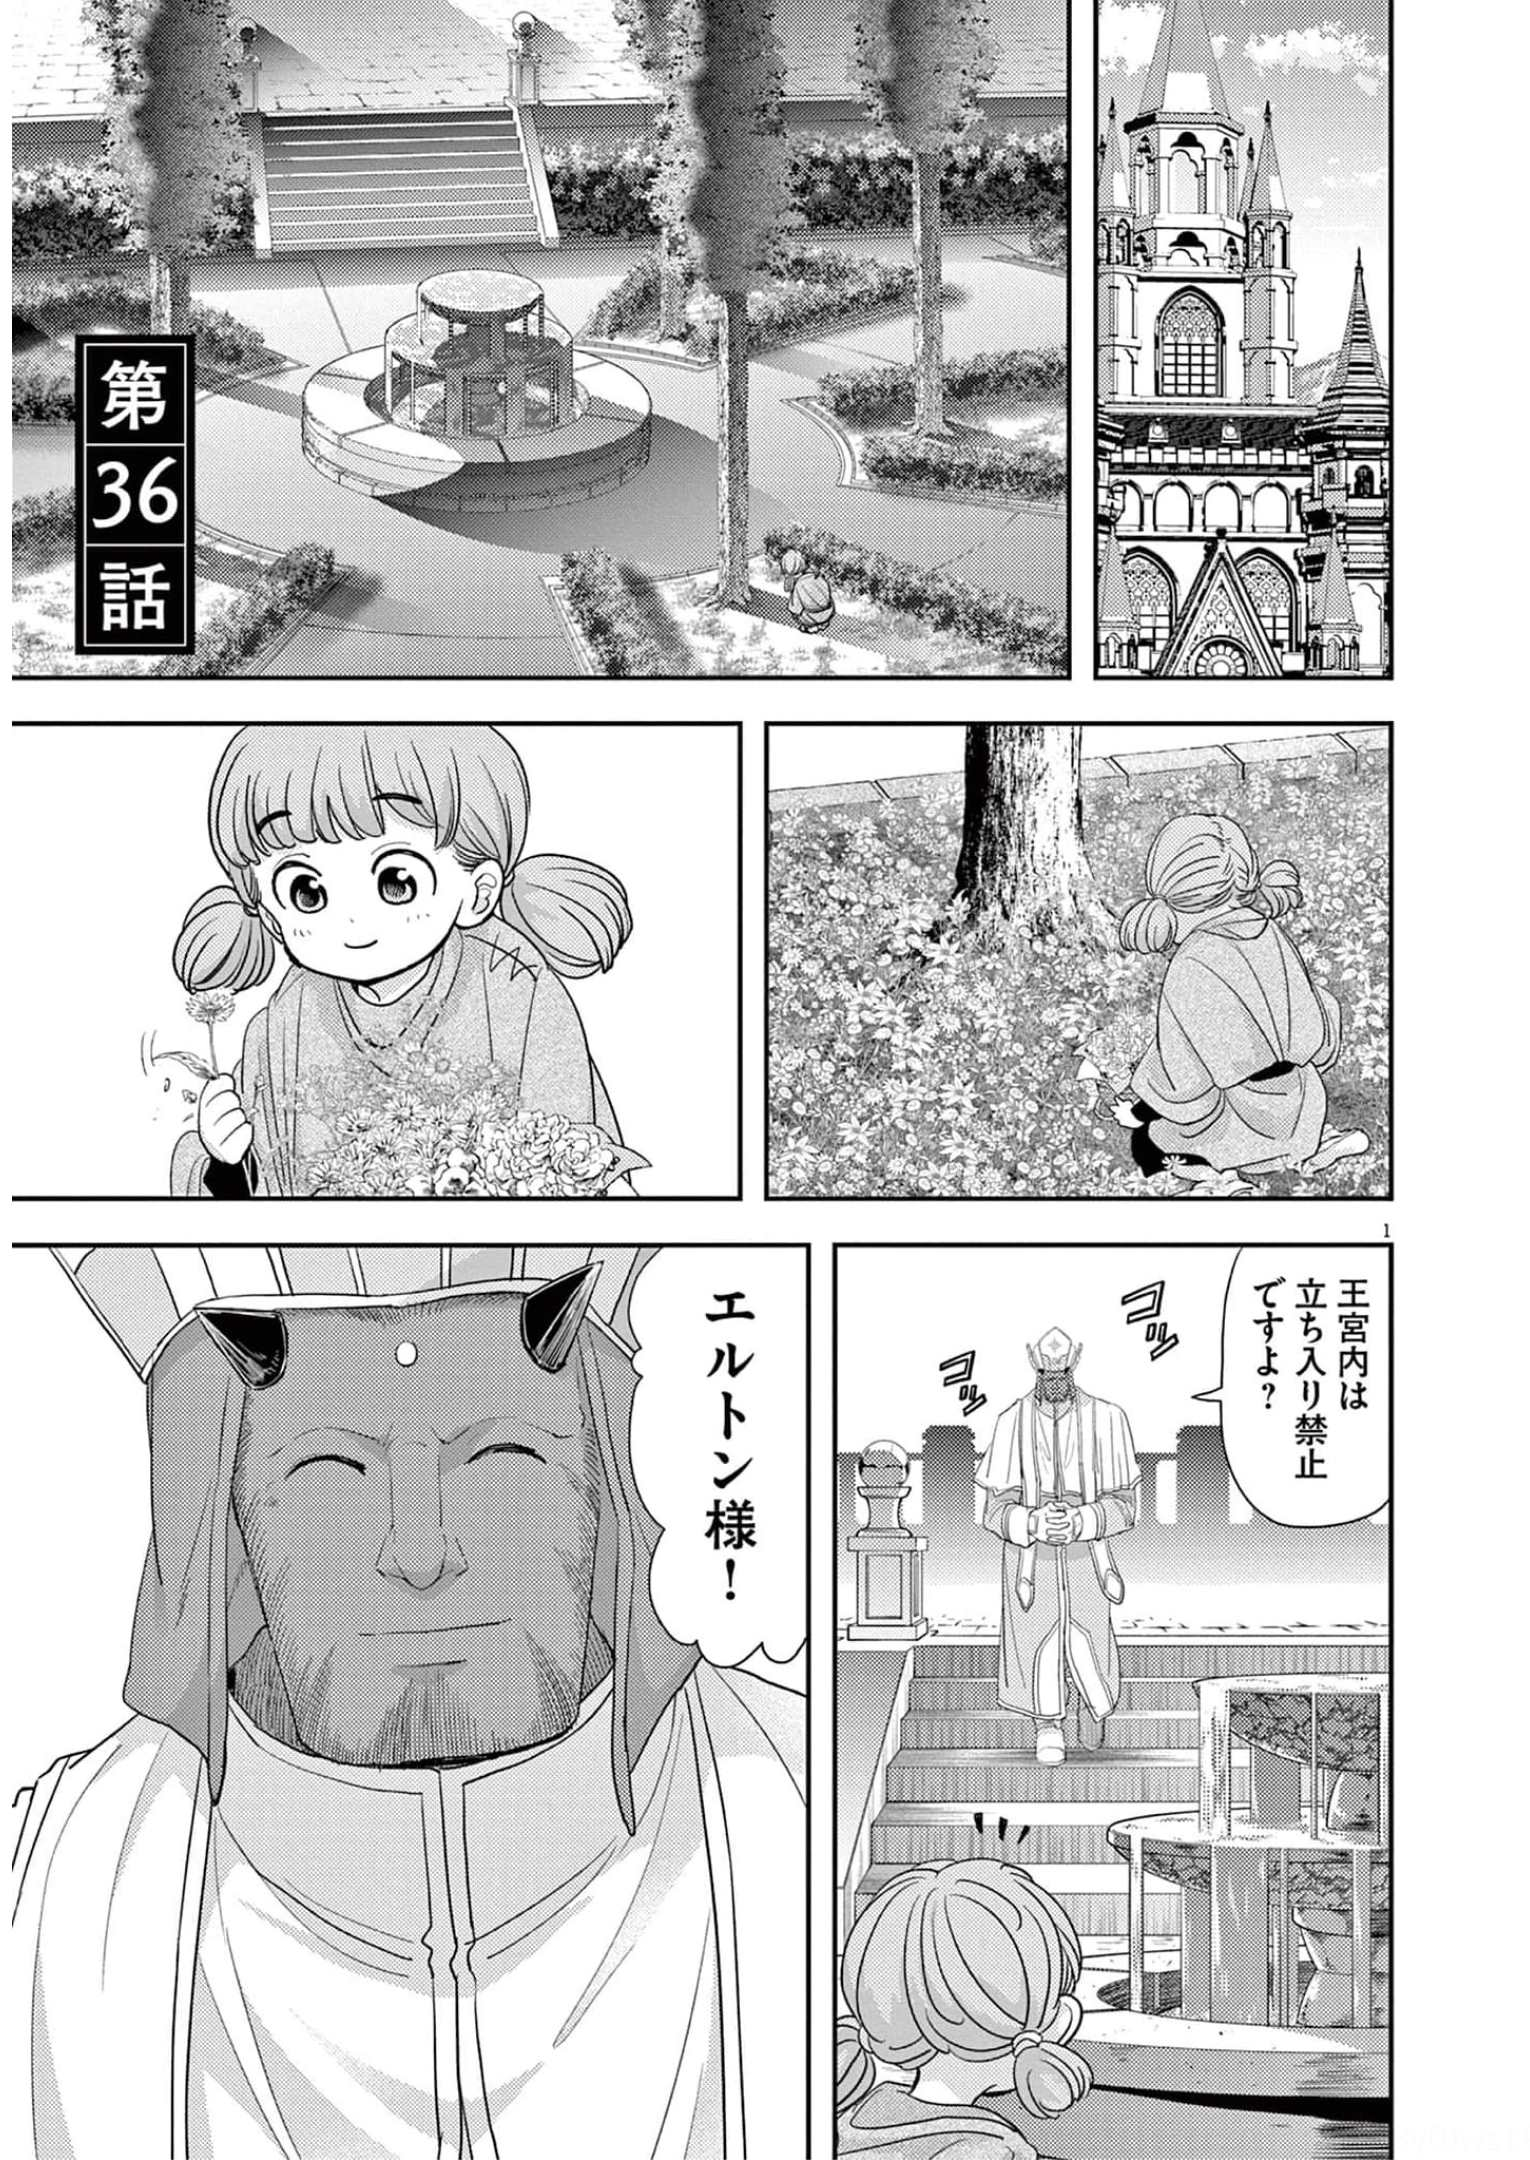 Isekai Shikkaku - Chapter 36 - Page 1